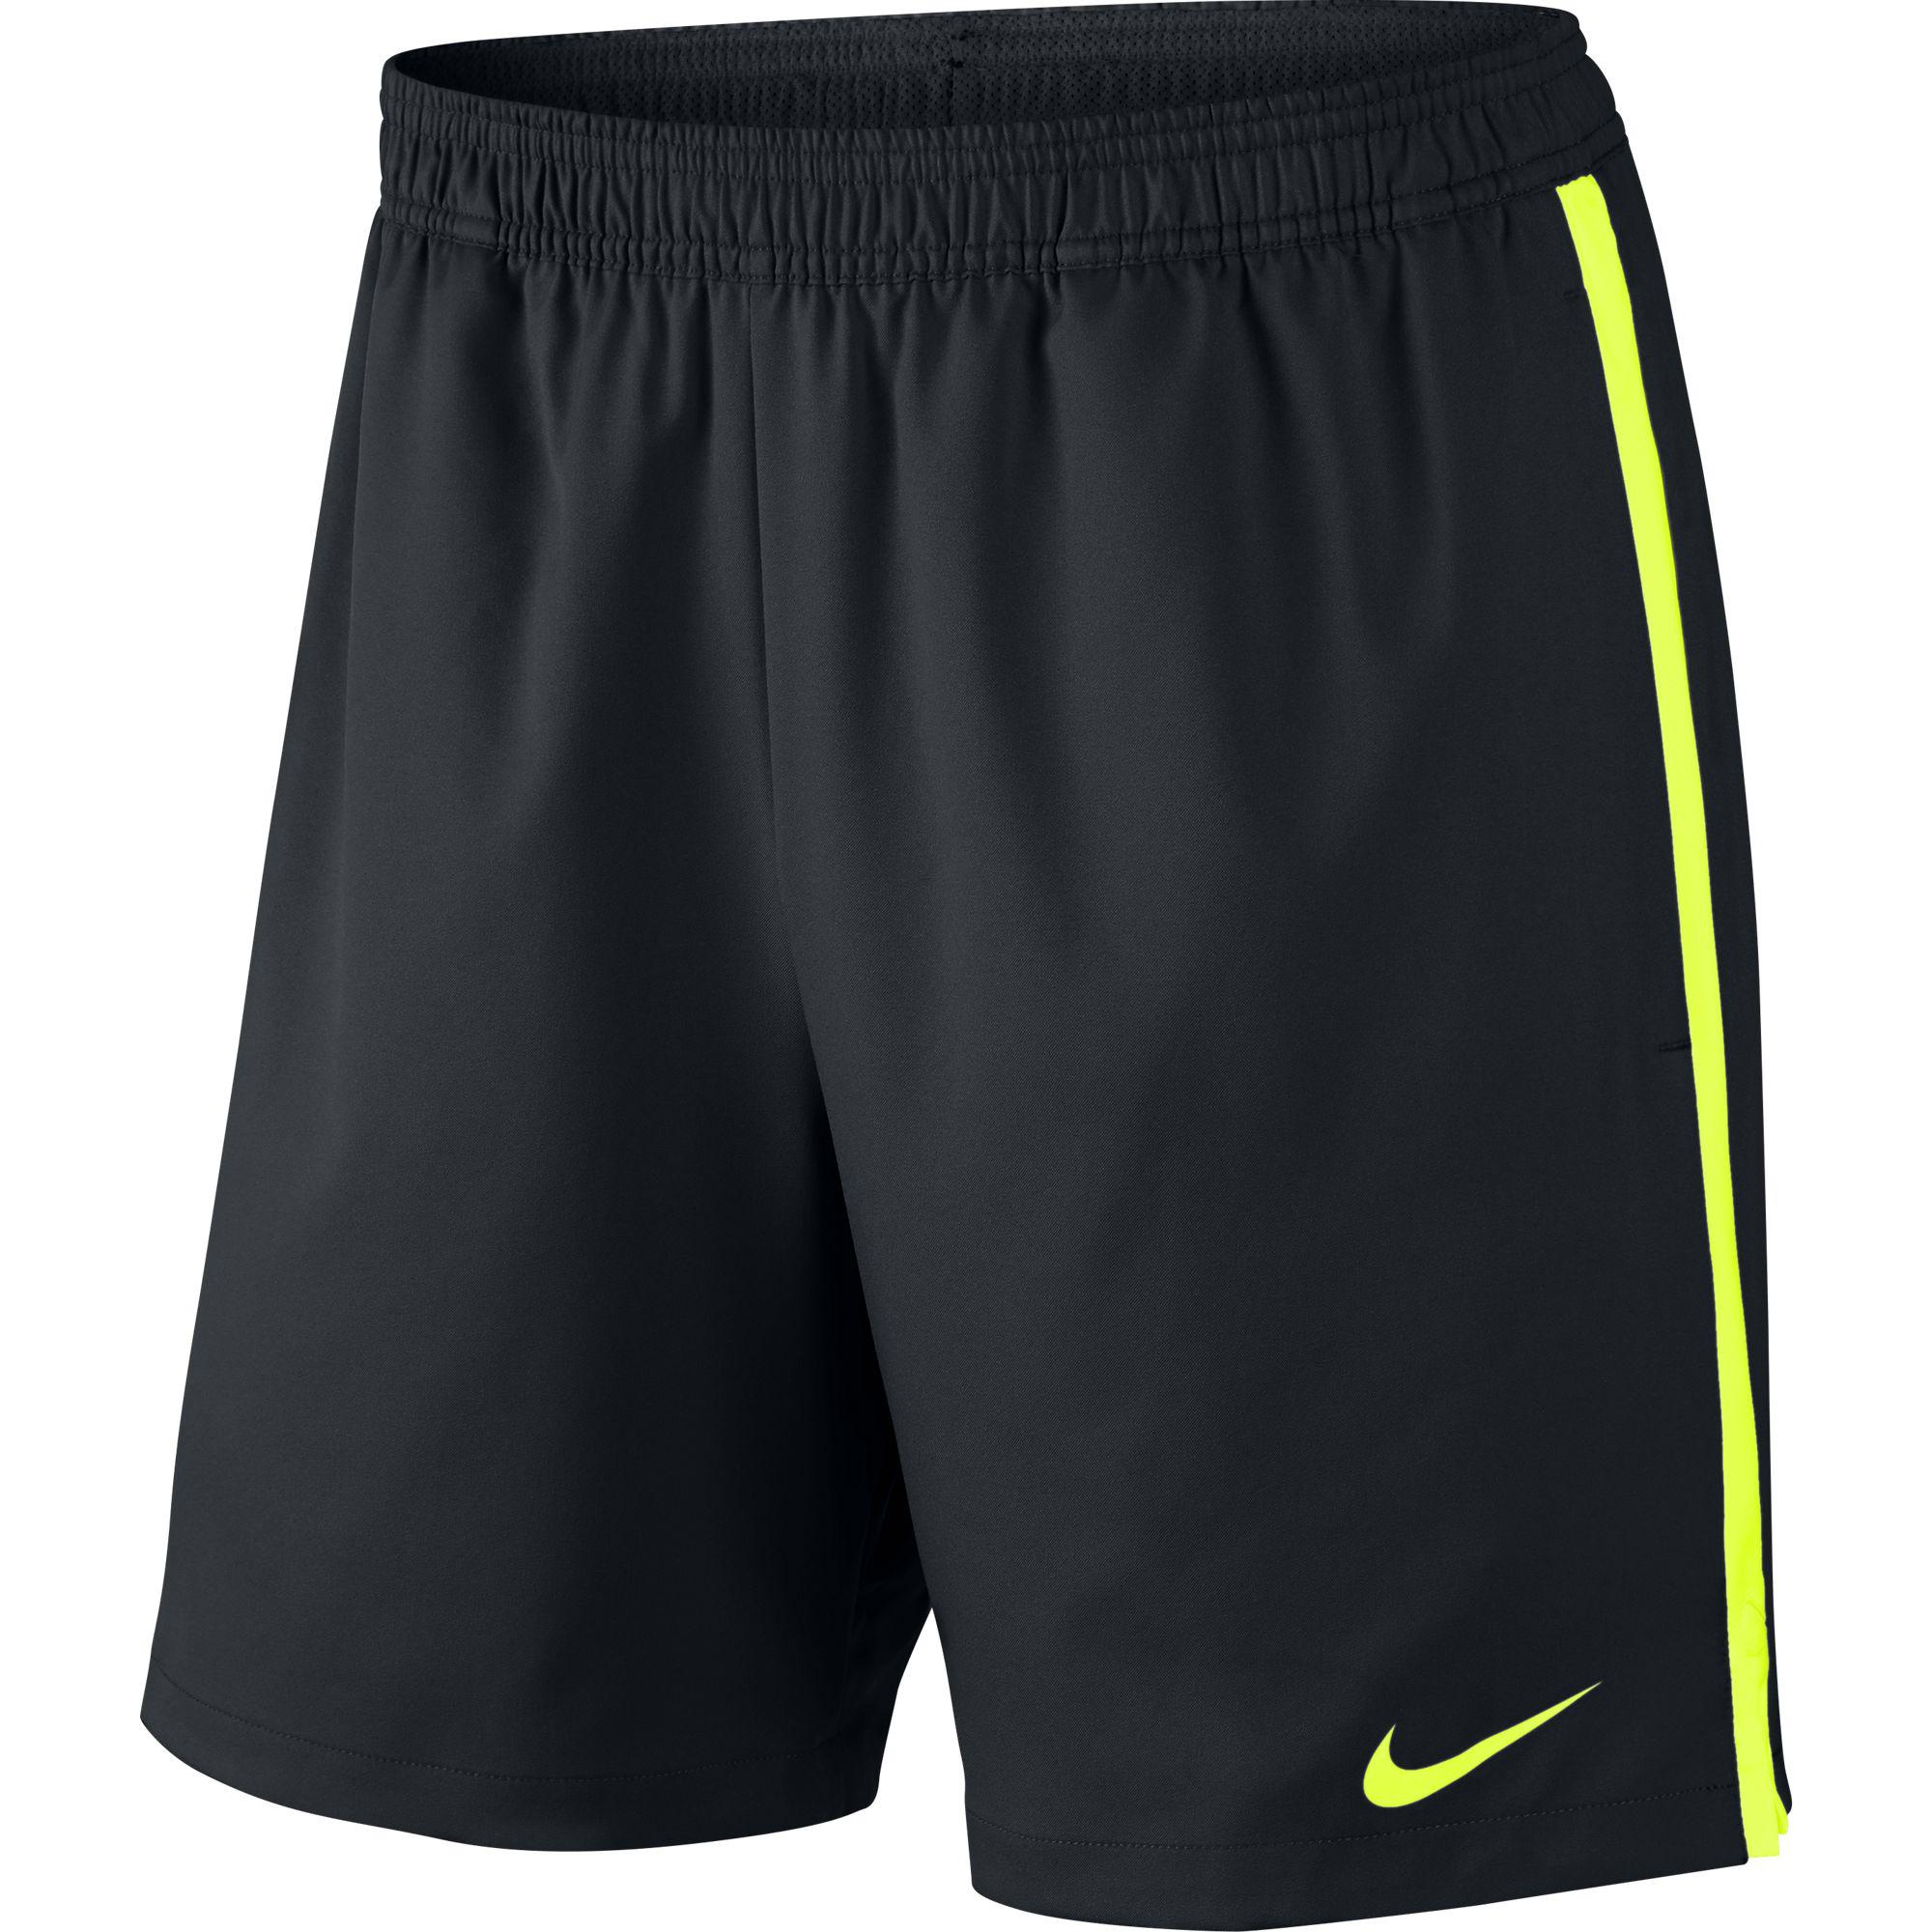 Nike Mens Court 7 Inch Tennis Shorts - Black/Volt - Tennisnuts.com